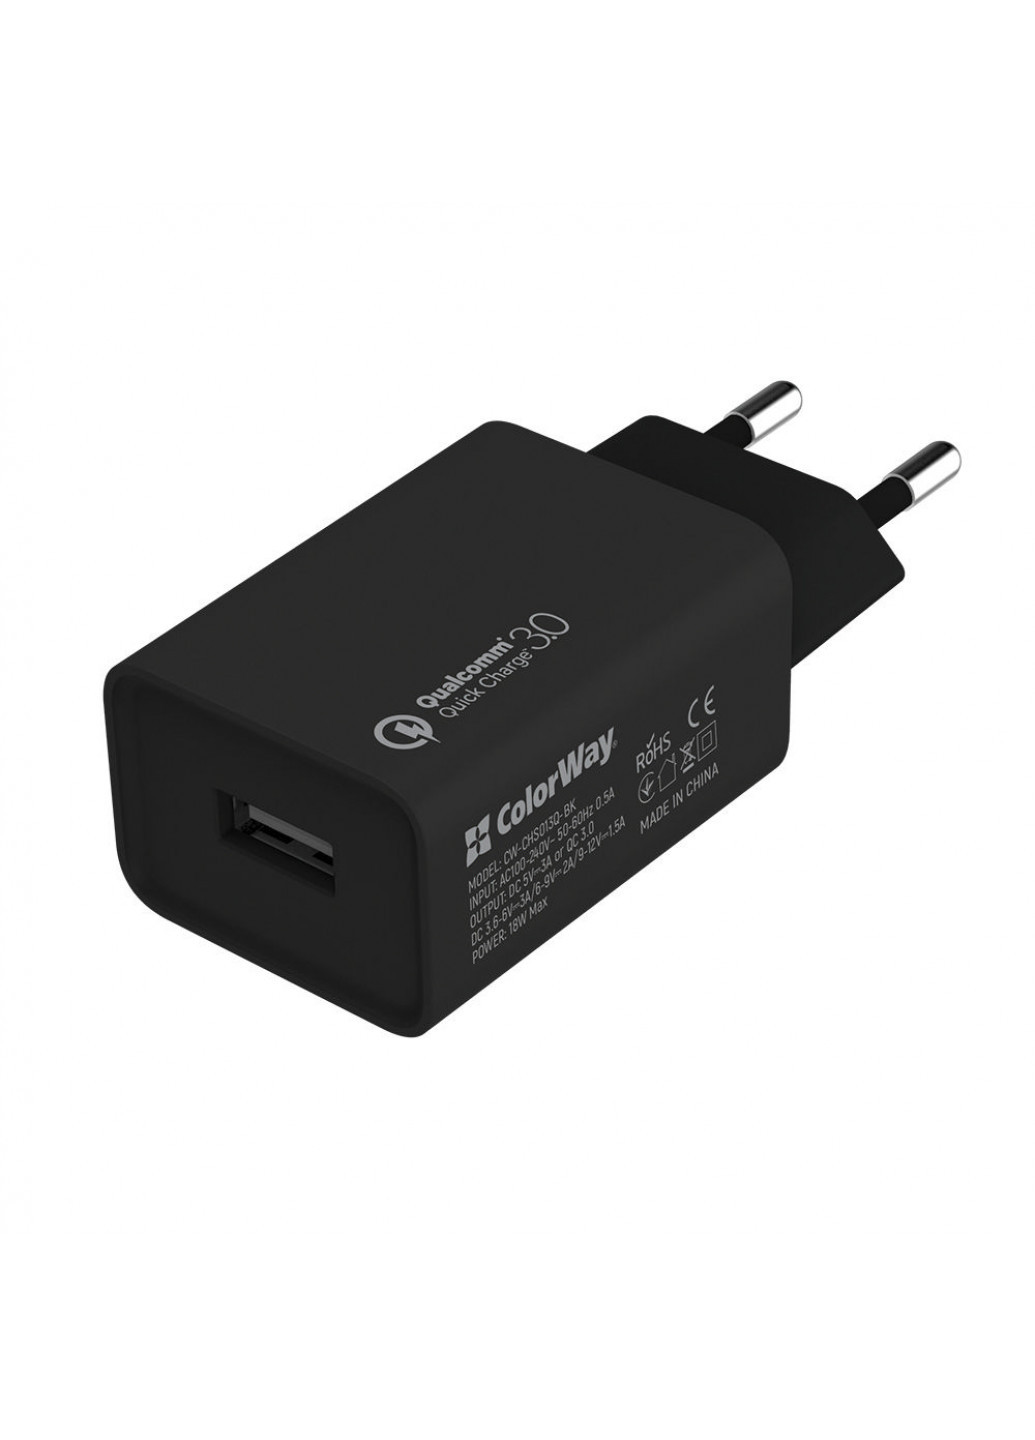 Сетевое зарядное устройство 1USB Quick Charge 3.0 (18W) Black + кабель MicroUSB () Colorway CW-CHS013QCM-BK